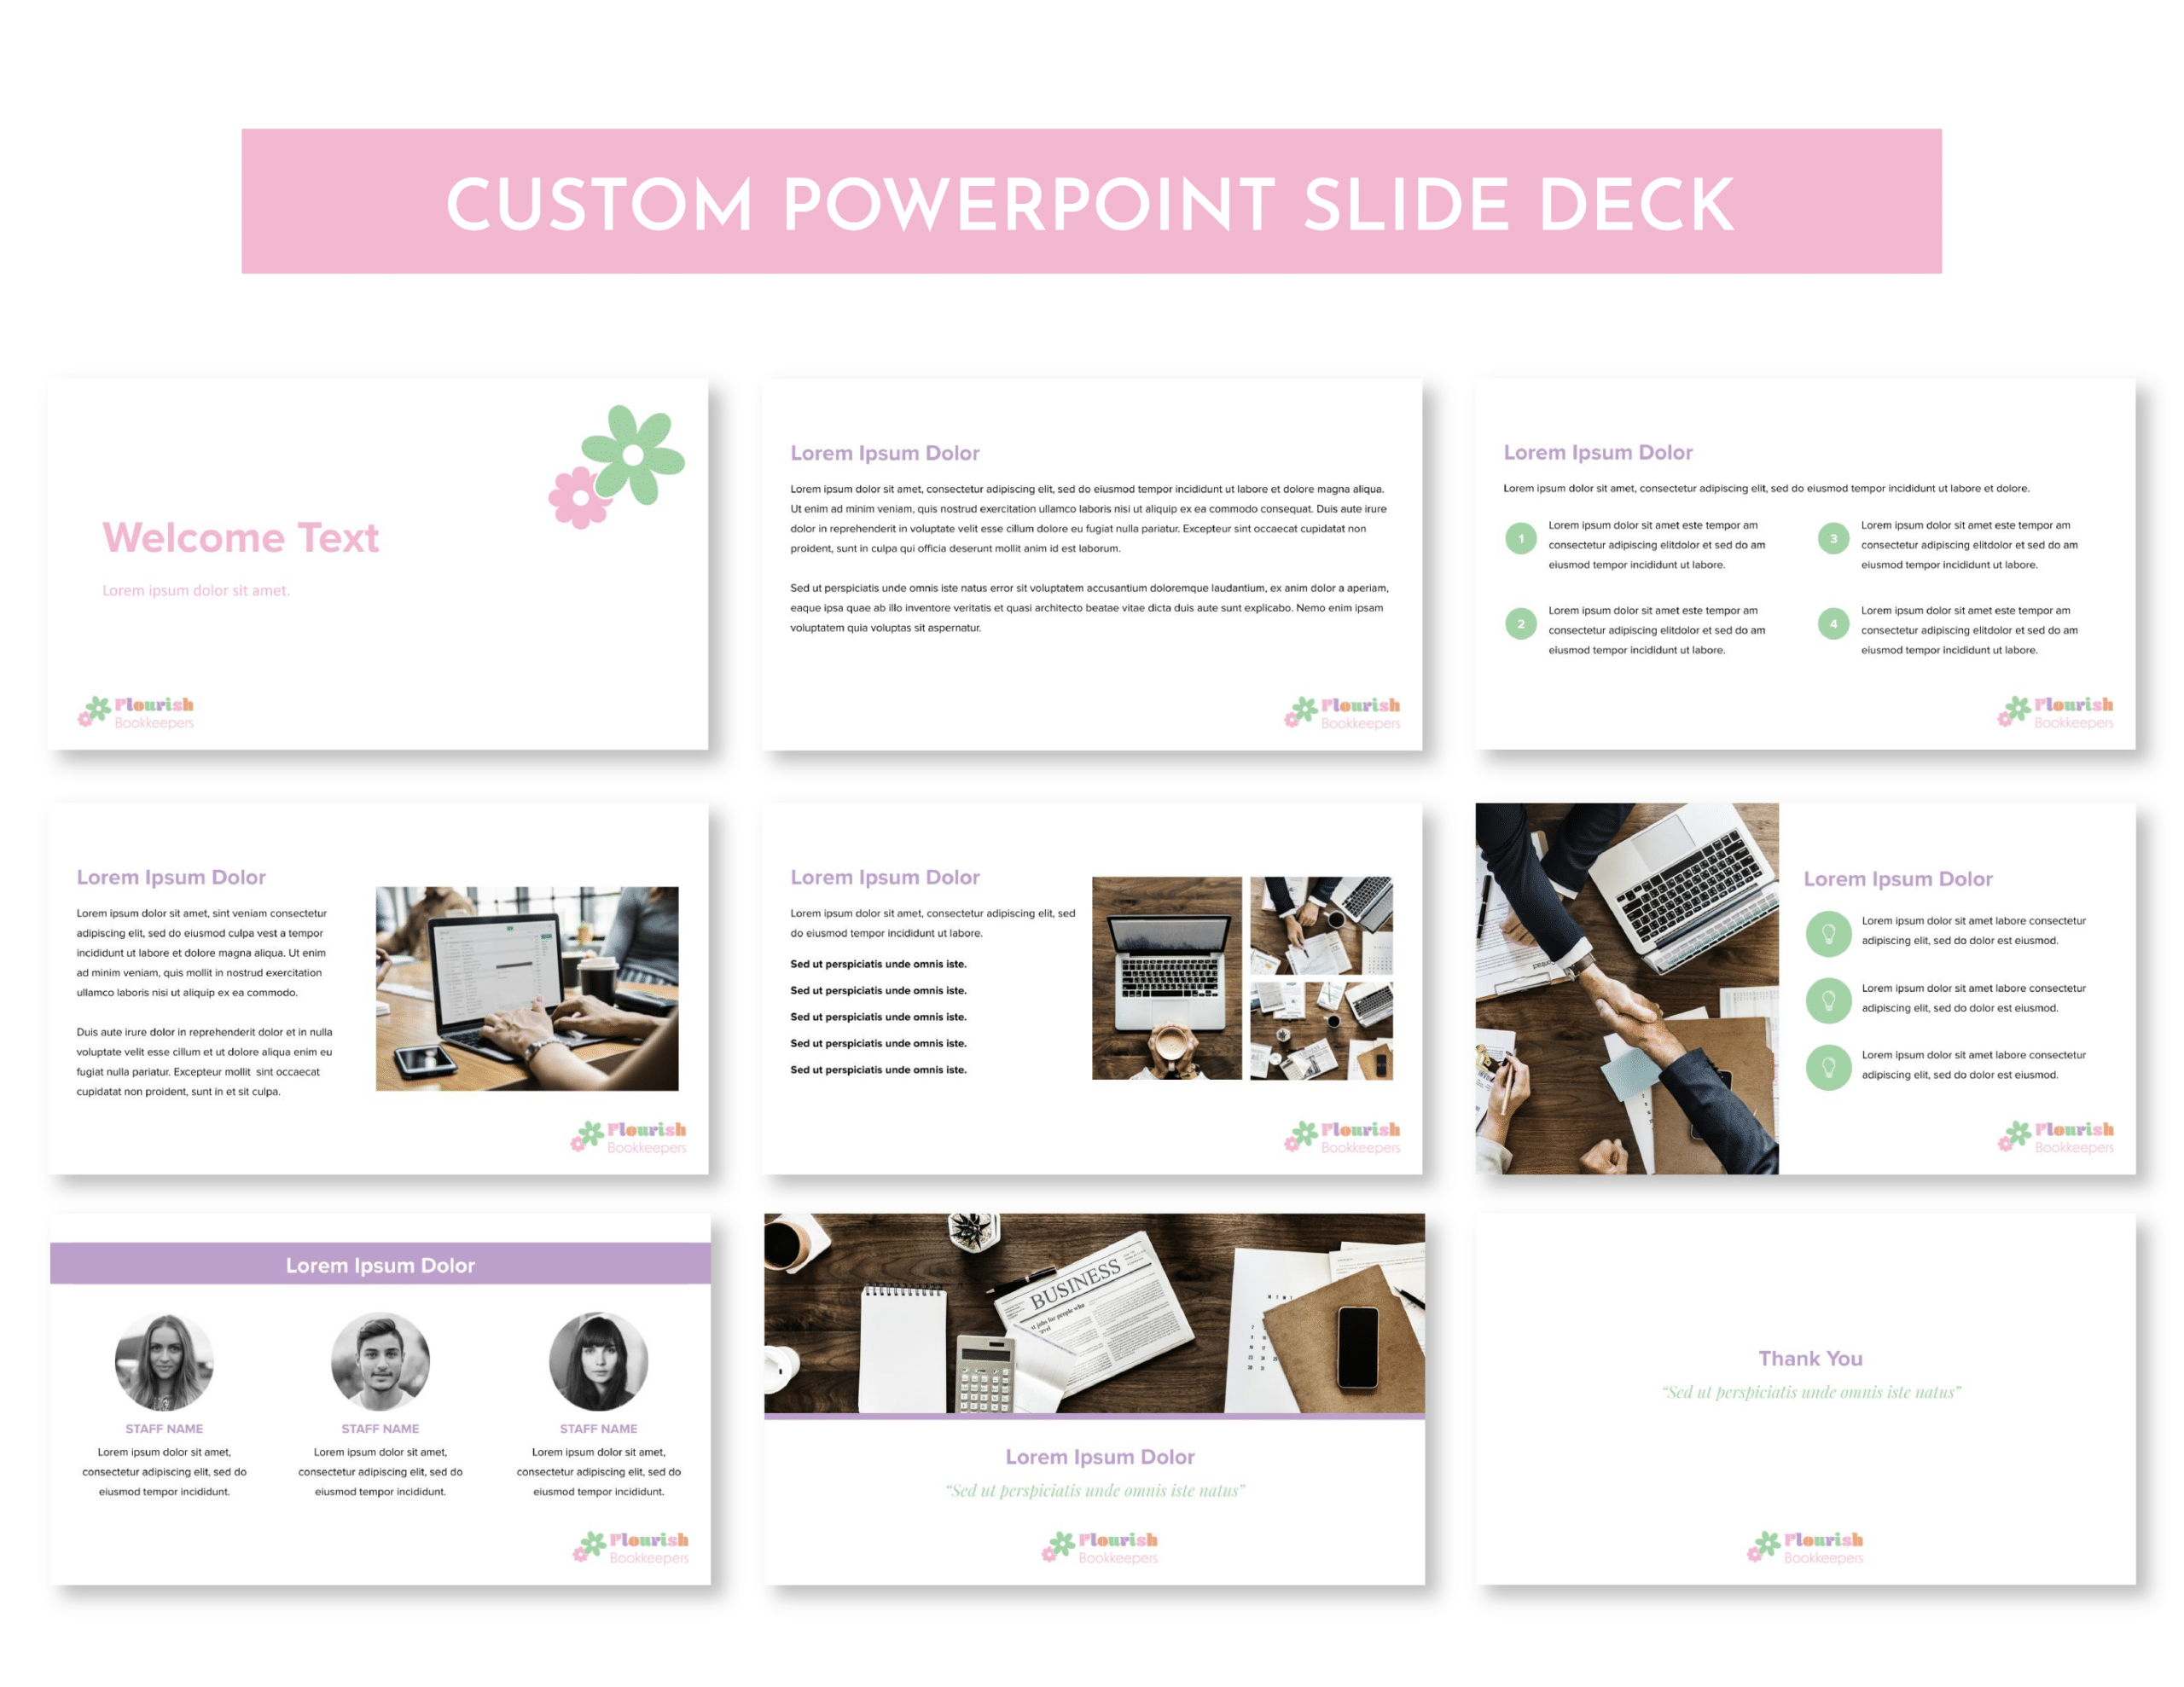 05FlourishBK_Showcase_Custom PowerPoint Slide Deck